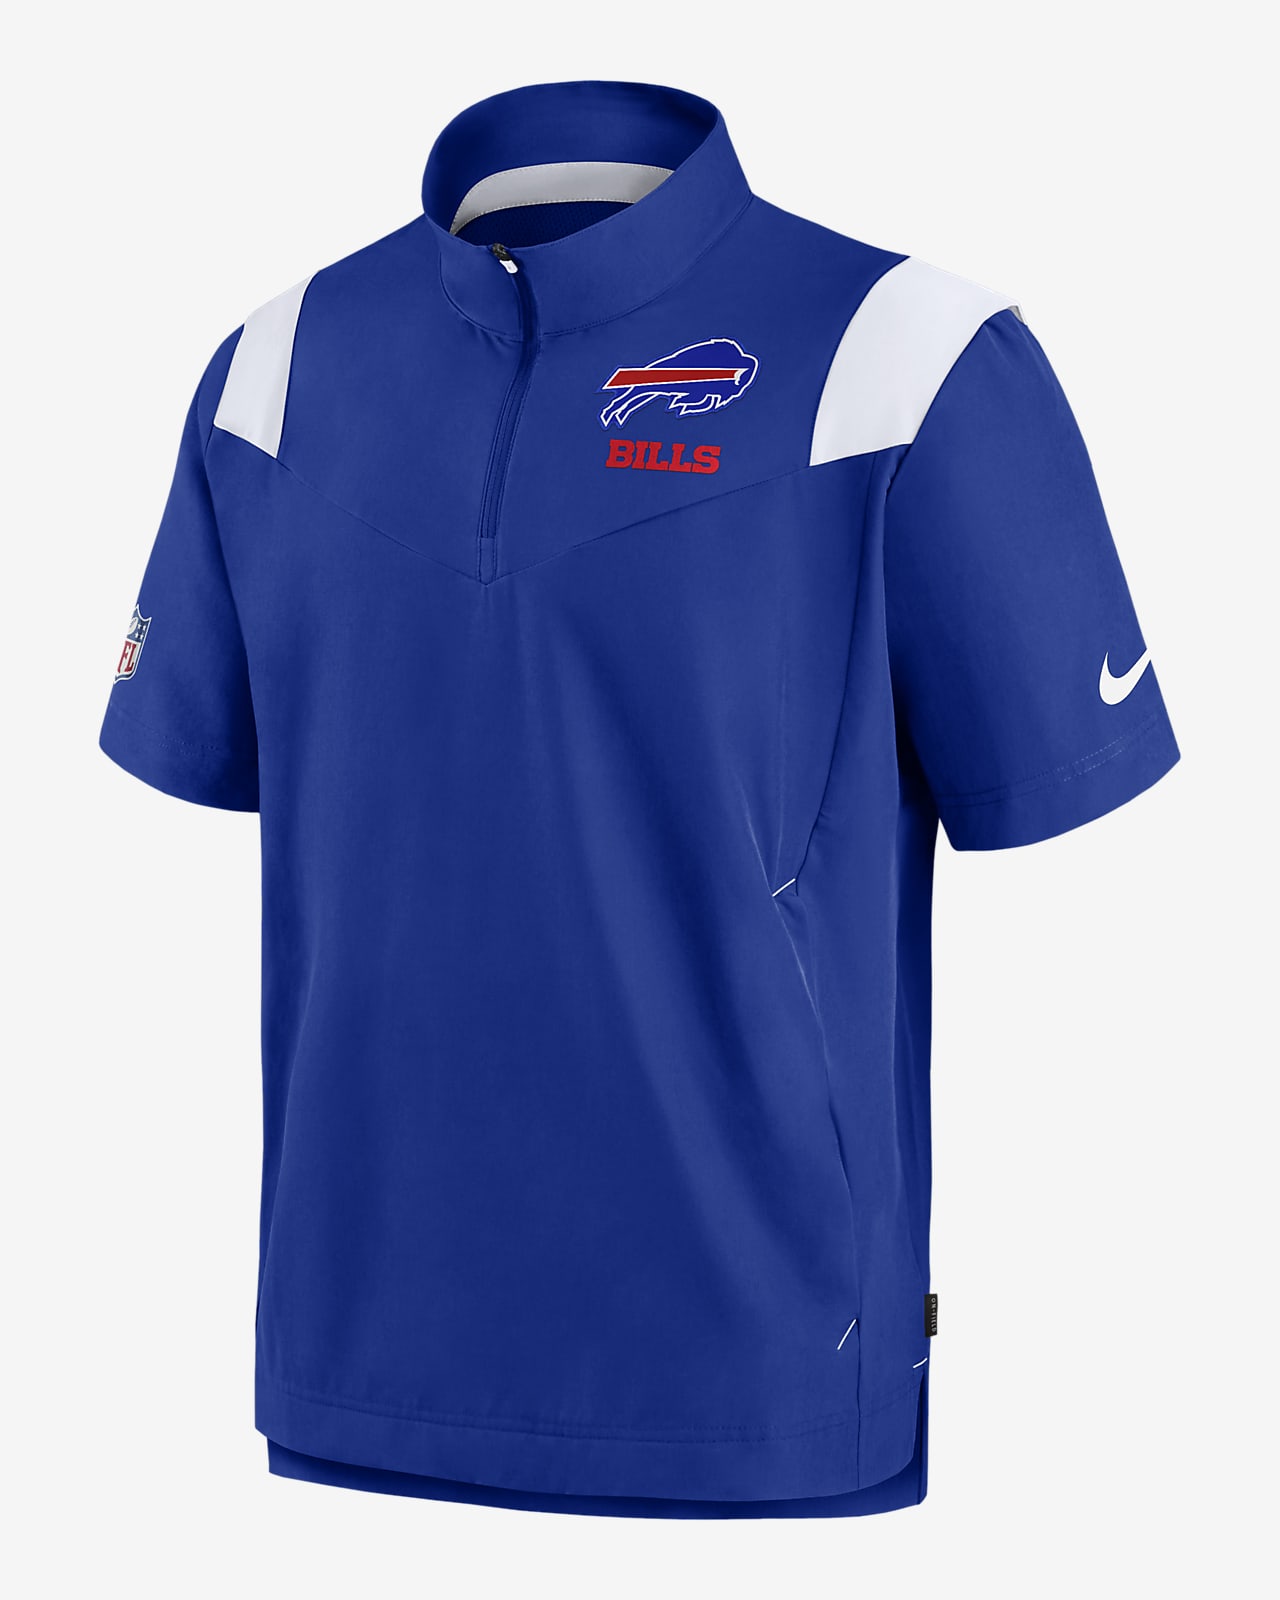 Men's Nike Royal Buffalo Bills Sideline Coaches Chevron Lockup Pullover Top Size: Small